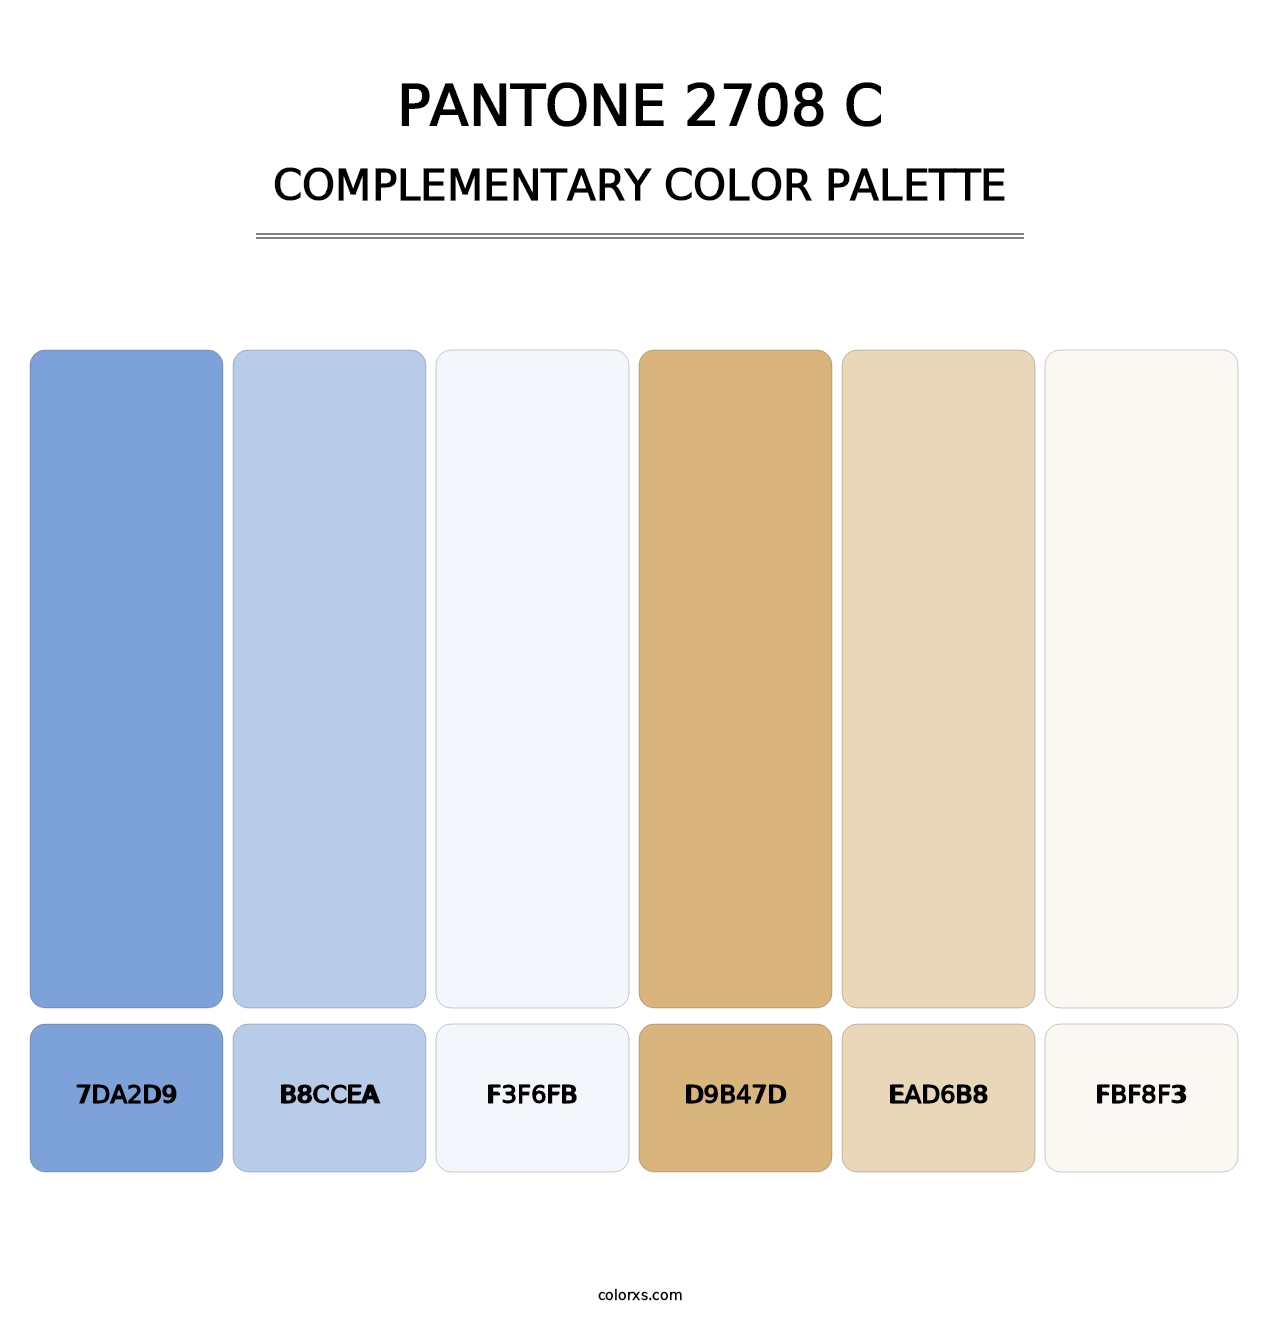 PANTONE 2708 C - Complementary Color Palette